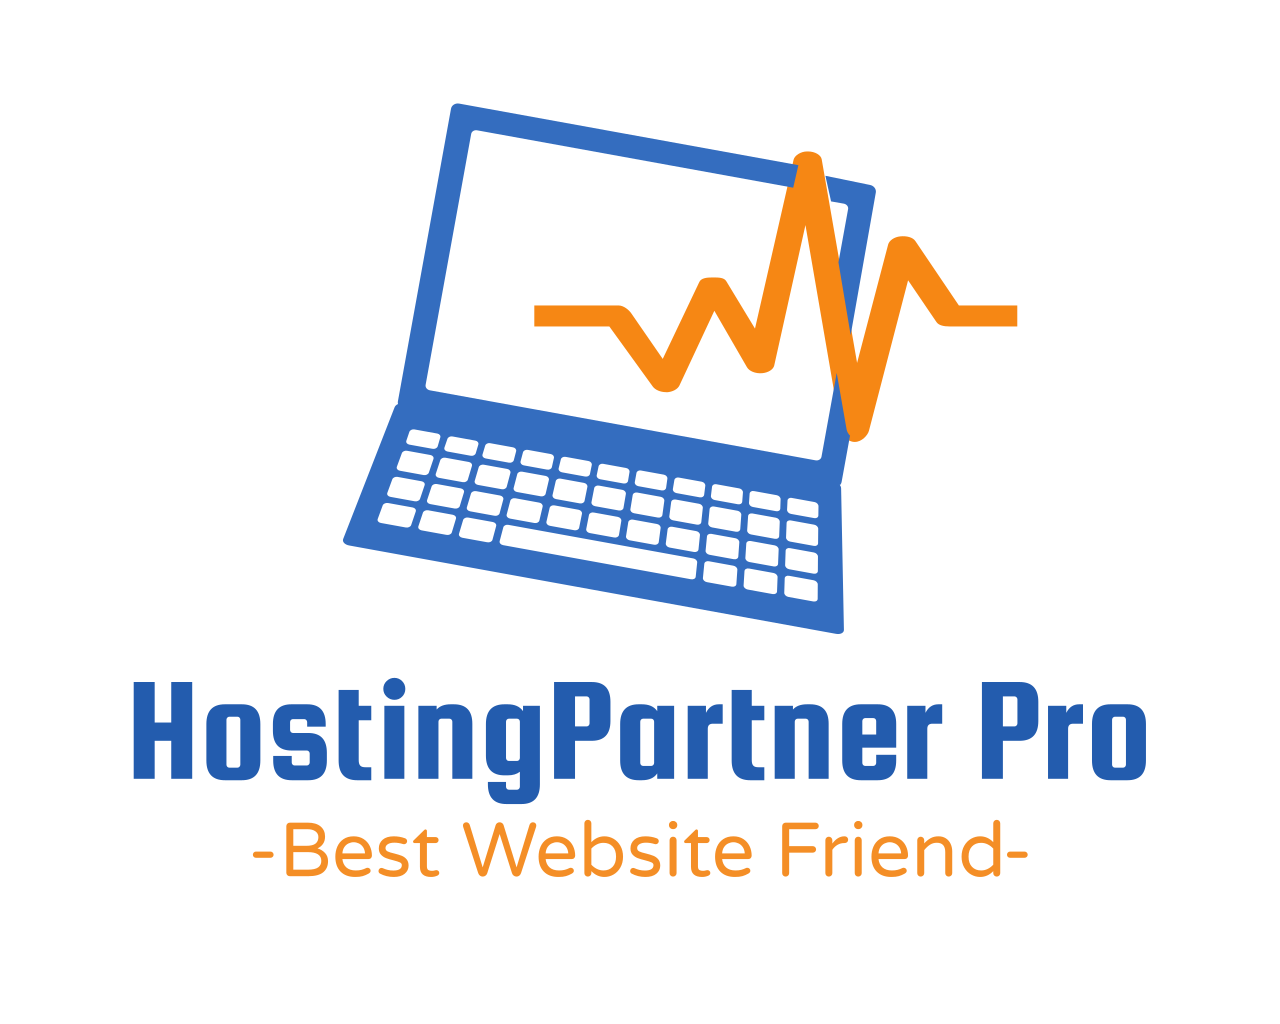 HostingPartner Pro